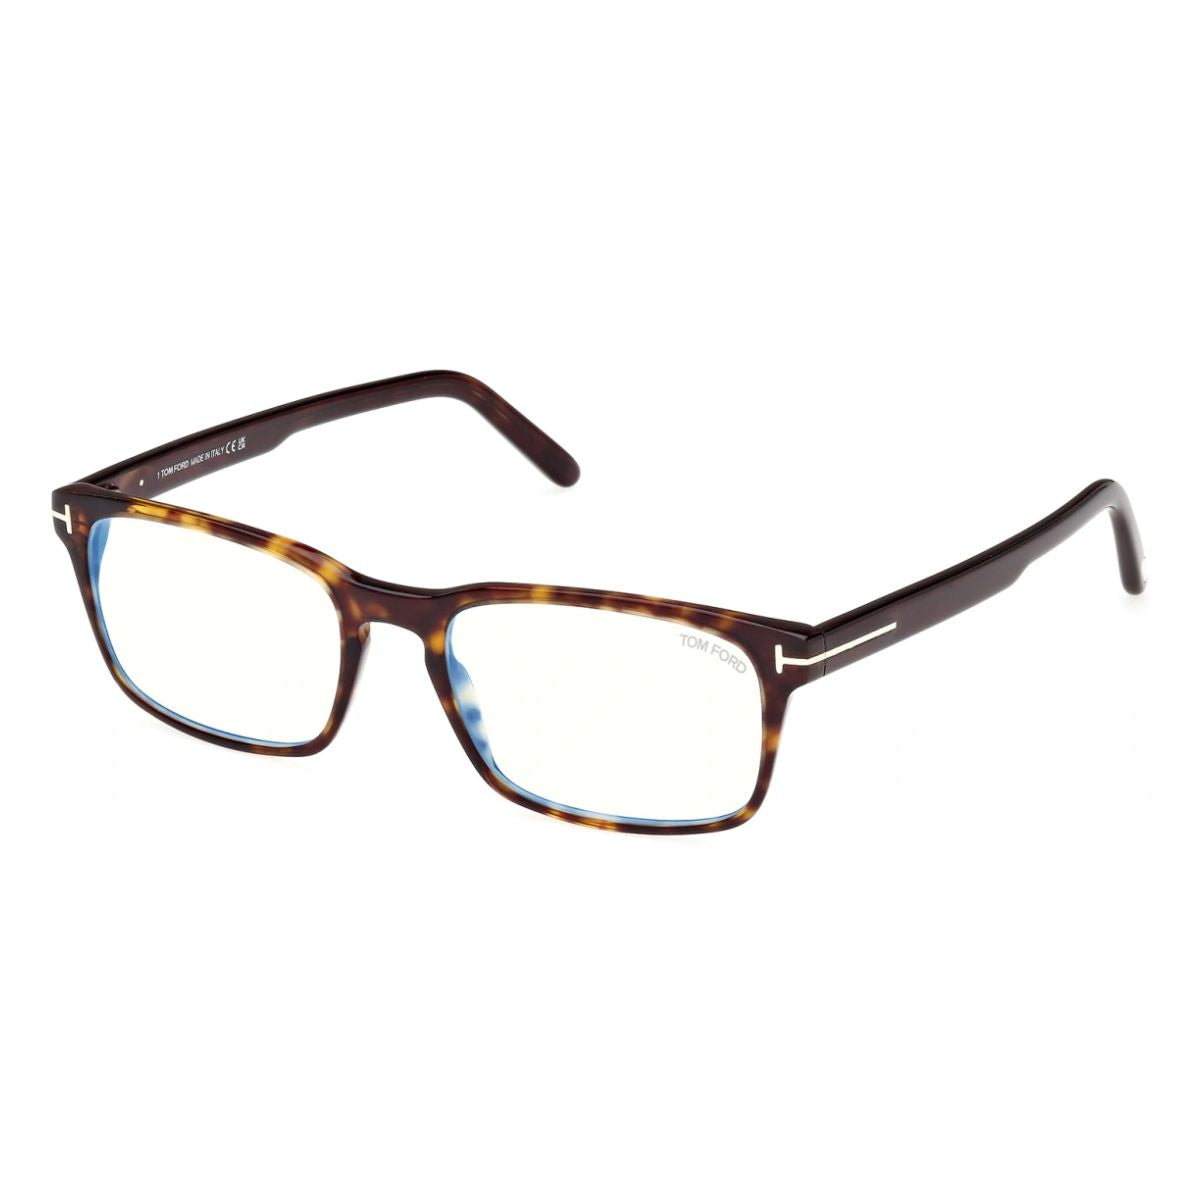 "Tom Ford TF 5938 052 frame, stylish rectangular-shaped Havana optical glasses for men, available online at Optorium."